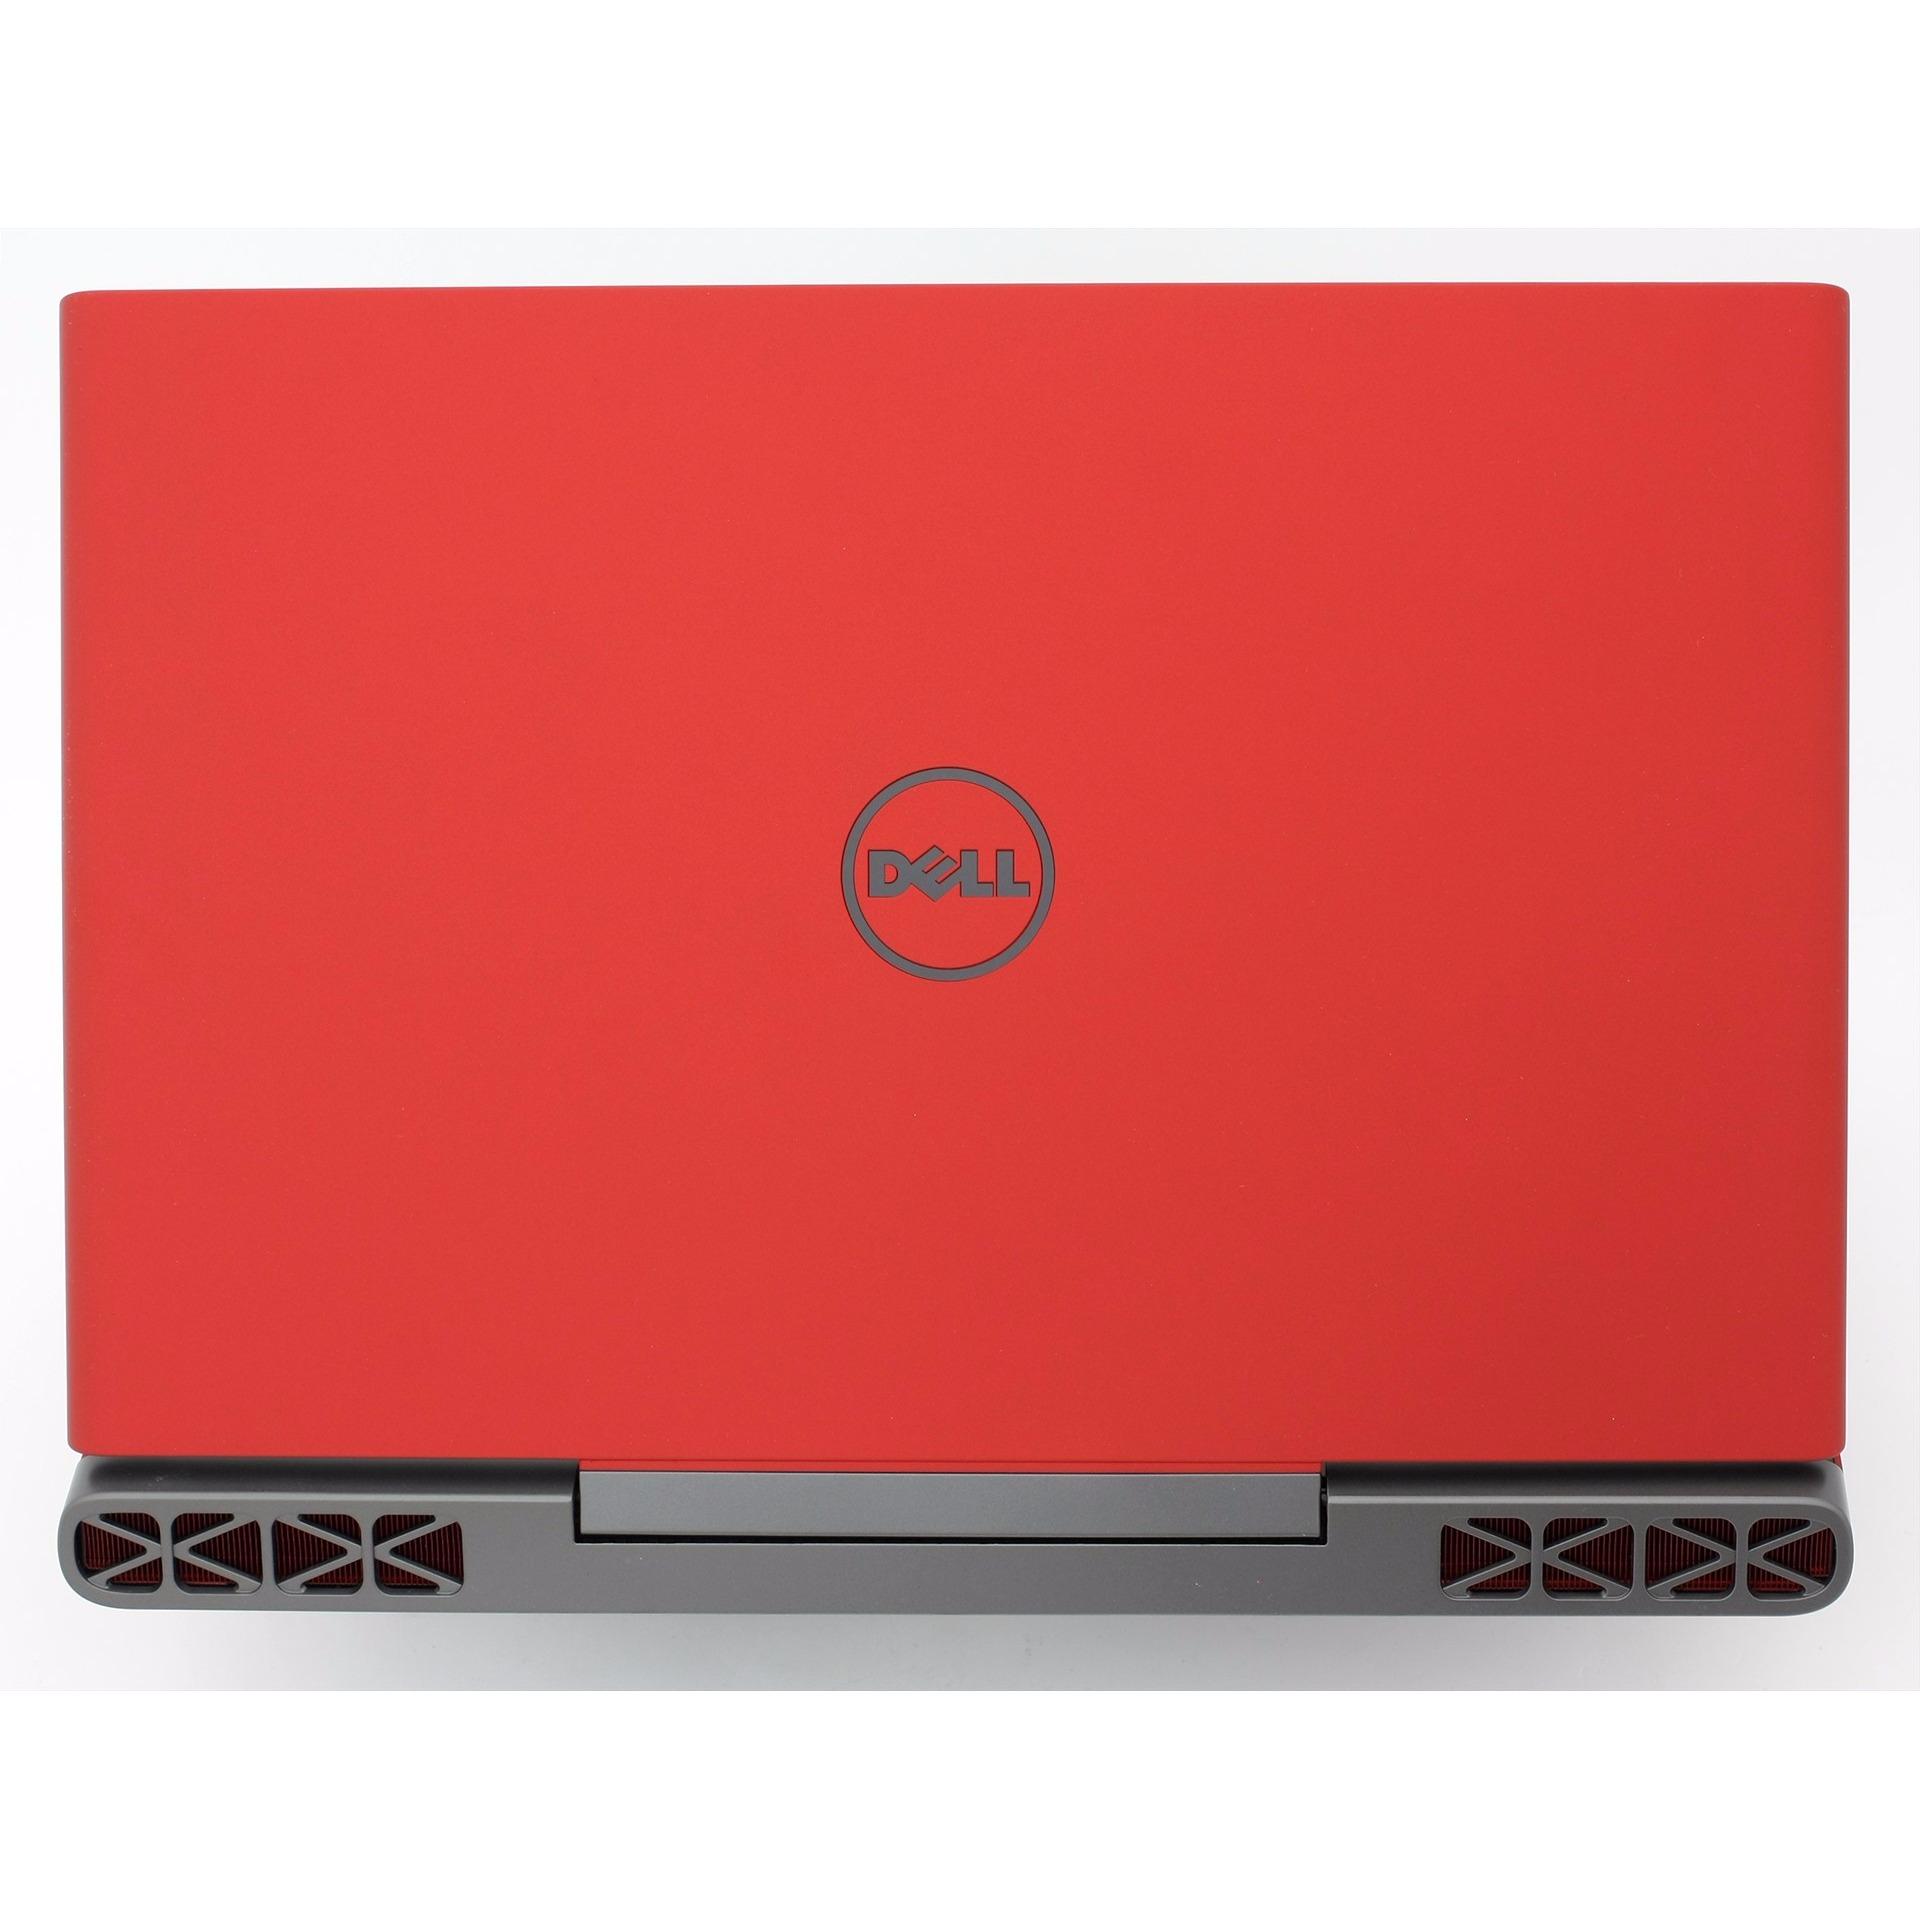 DELL 7567 Inspiron 15 7000 Gaming Laptop (RED) - i7-7700HQ,GTX1050TI 4GB,WIN10 *THE TECH SHOW PROMO*